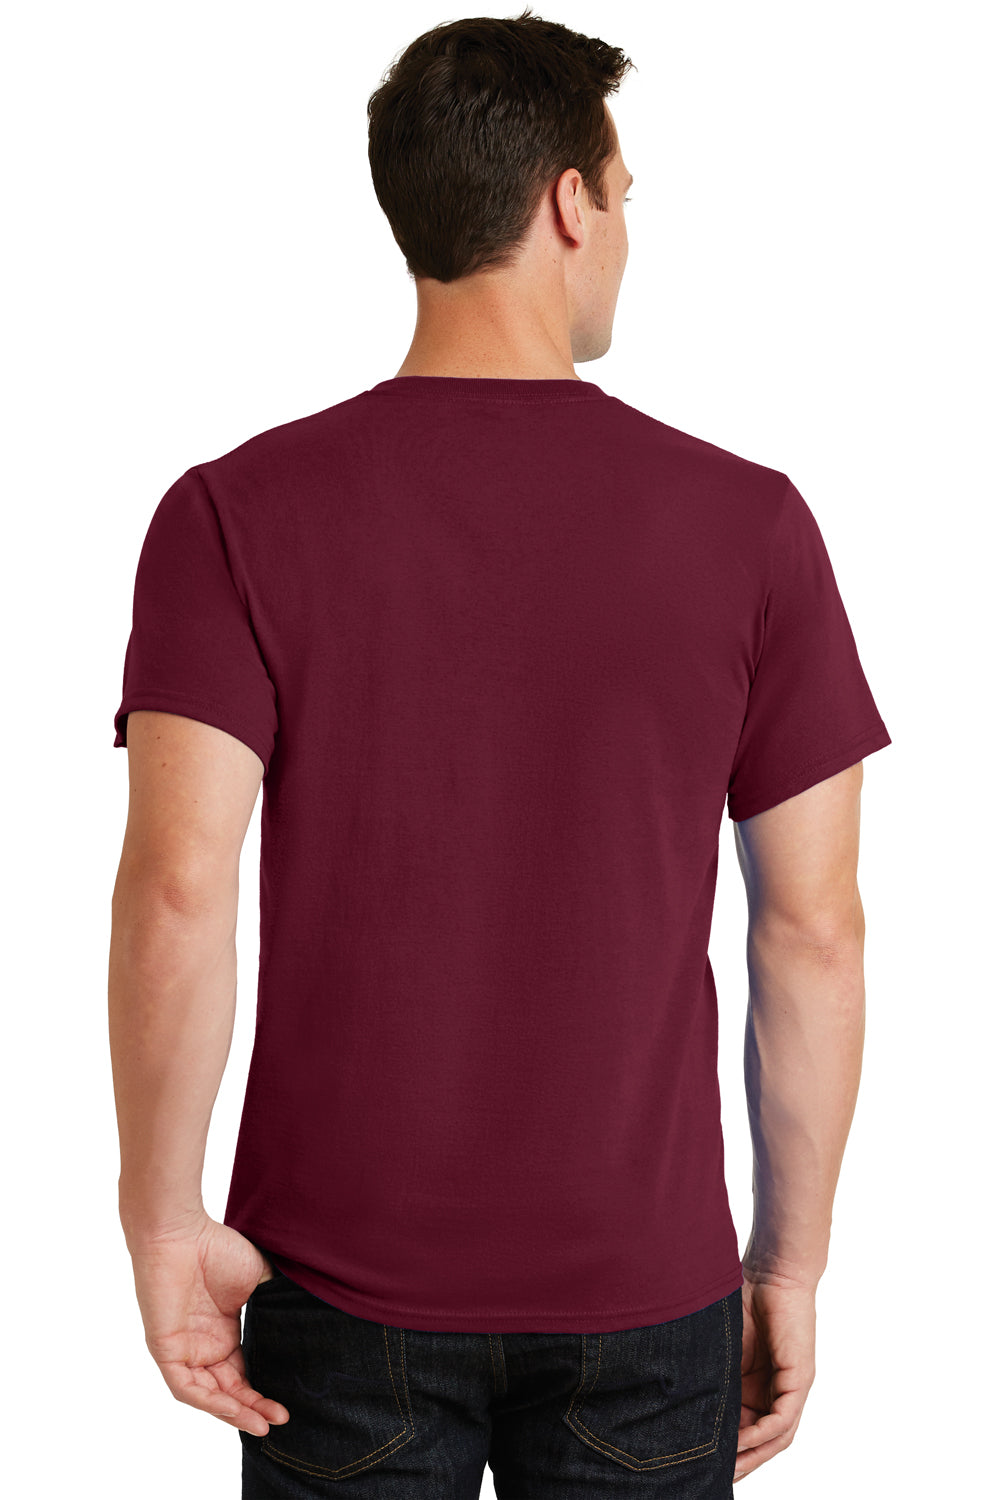 Port & Company PC61 Mens Essential Short Sleeve Crewneck T-Shirt Cardinal Red Back